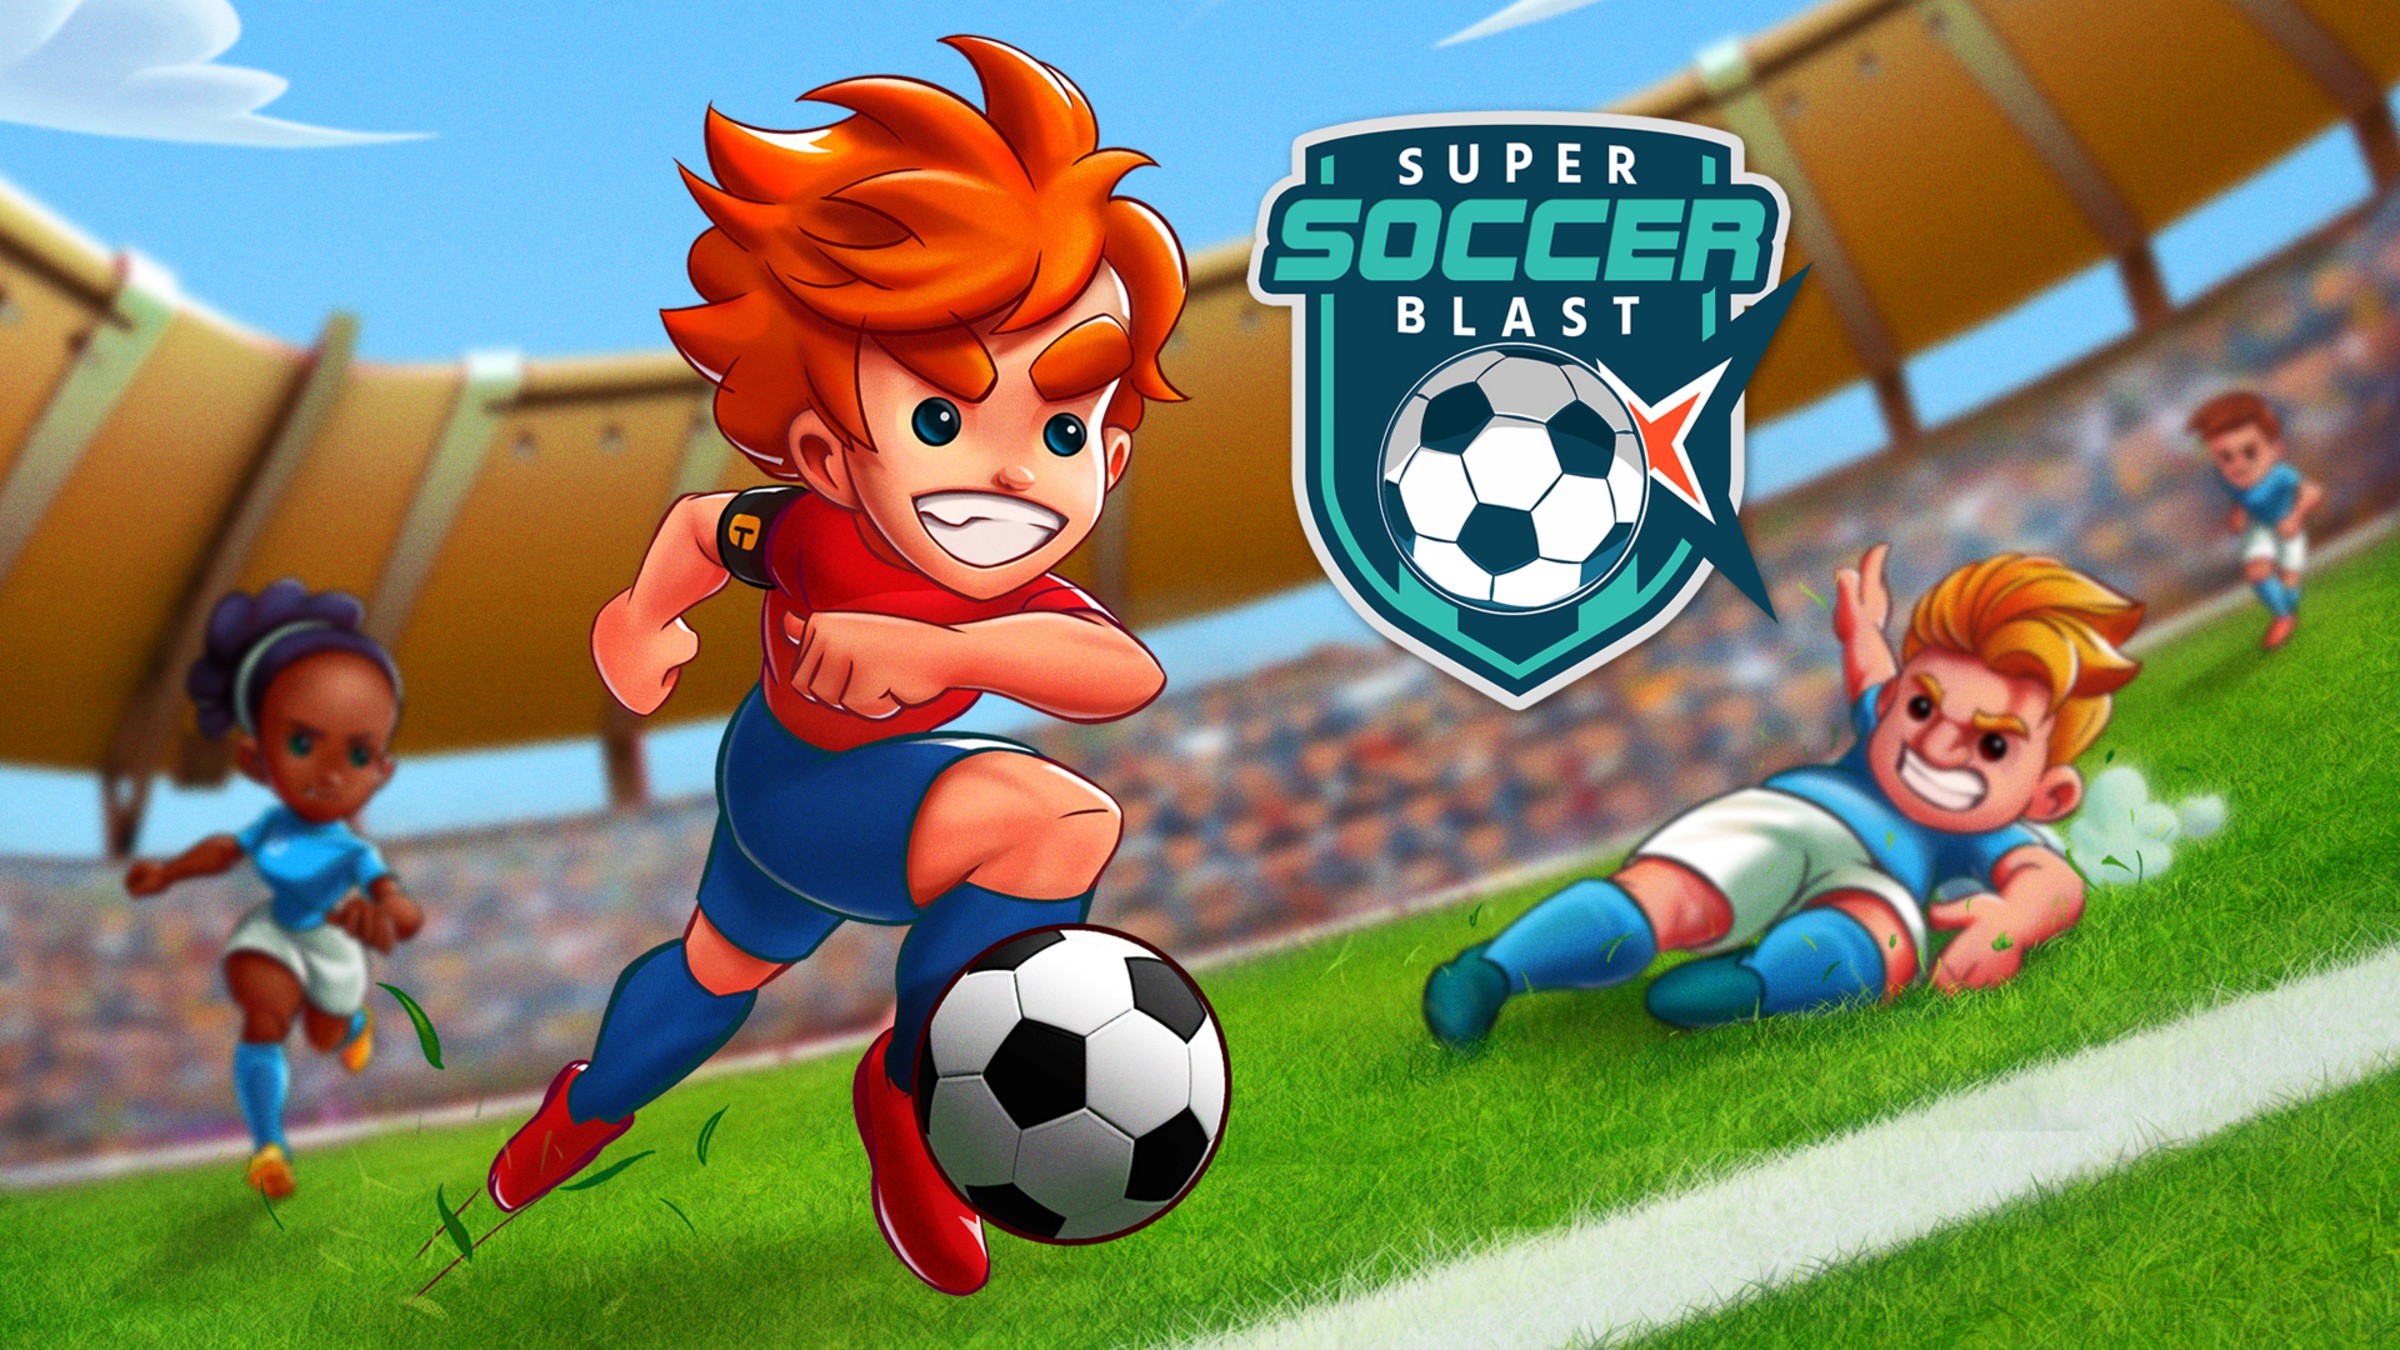 Super Soccer Blast for Nintendo Switch - Nintendo Official Site